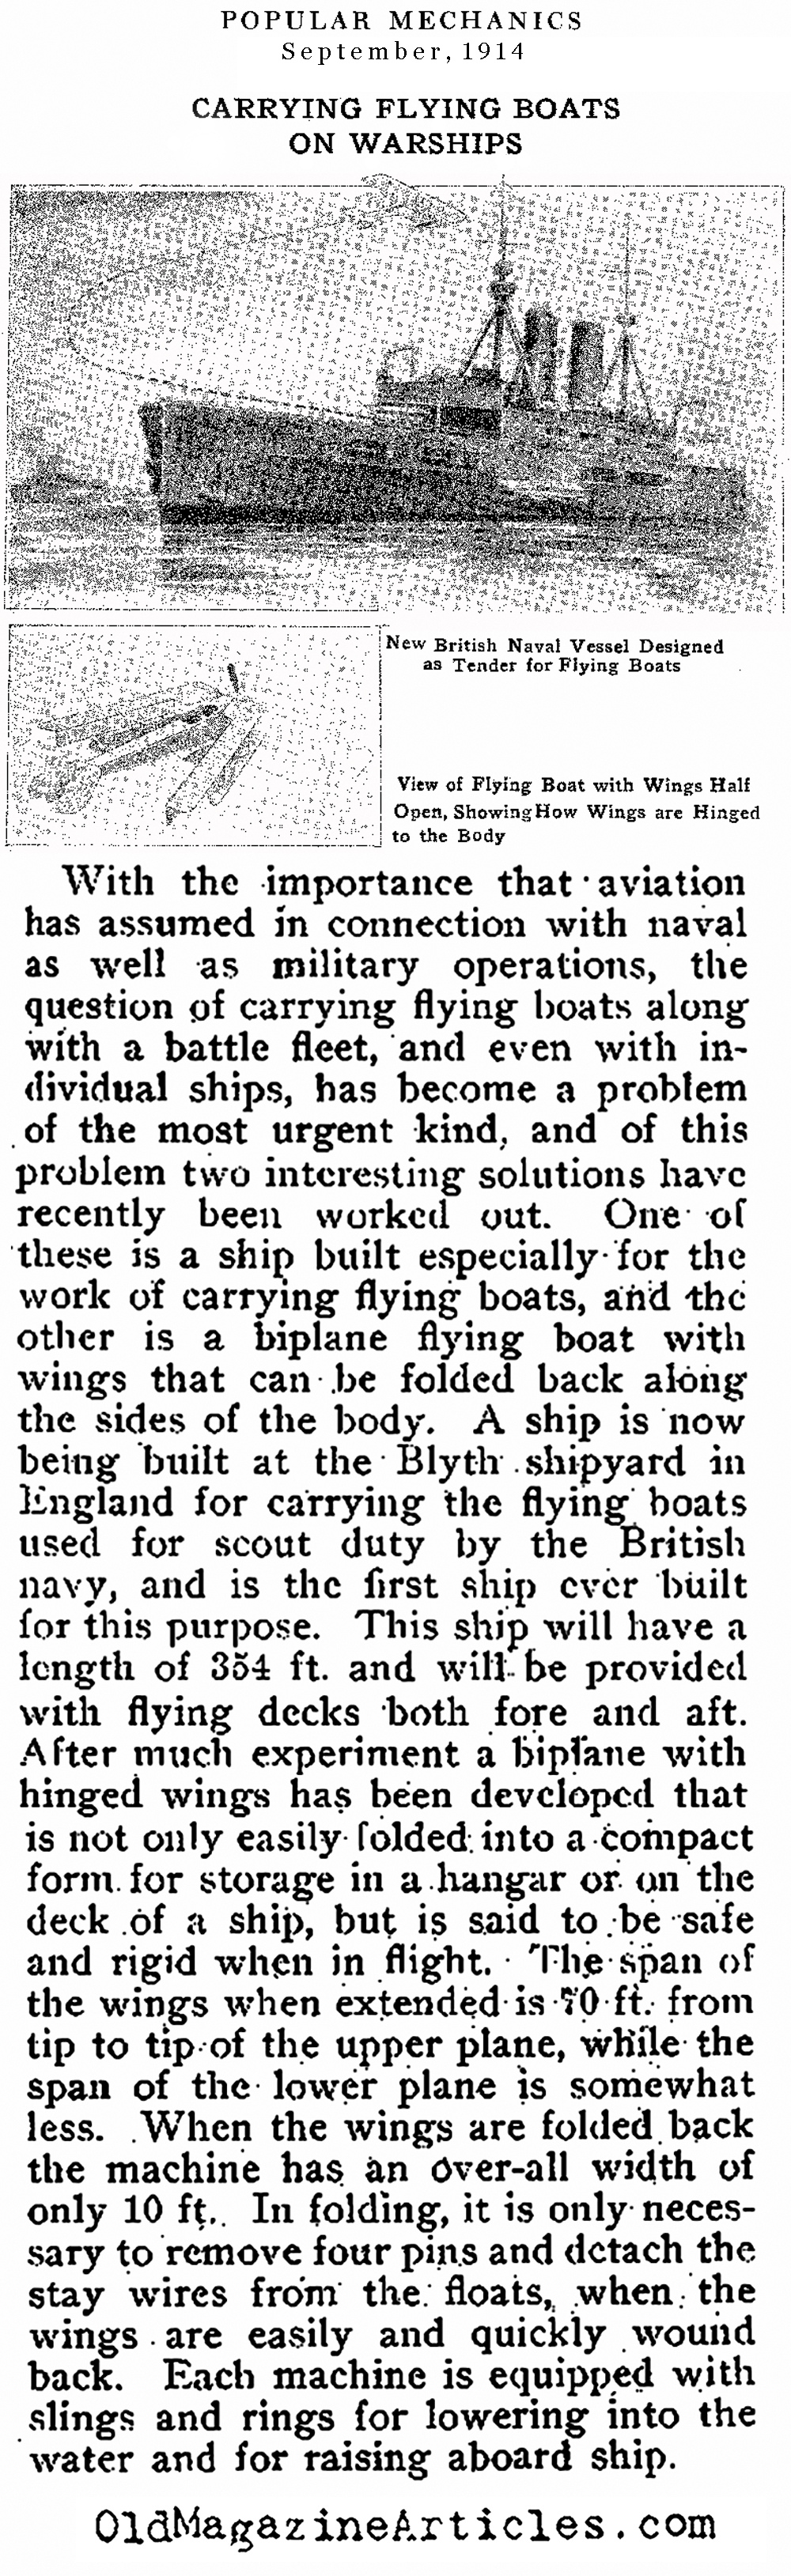 Naval Aviation as a Concept    (Popular Mechanics, 1914)